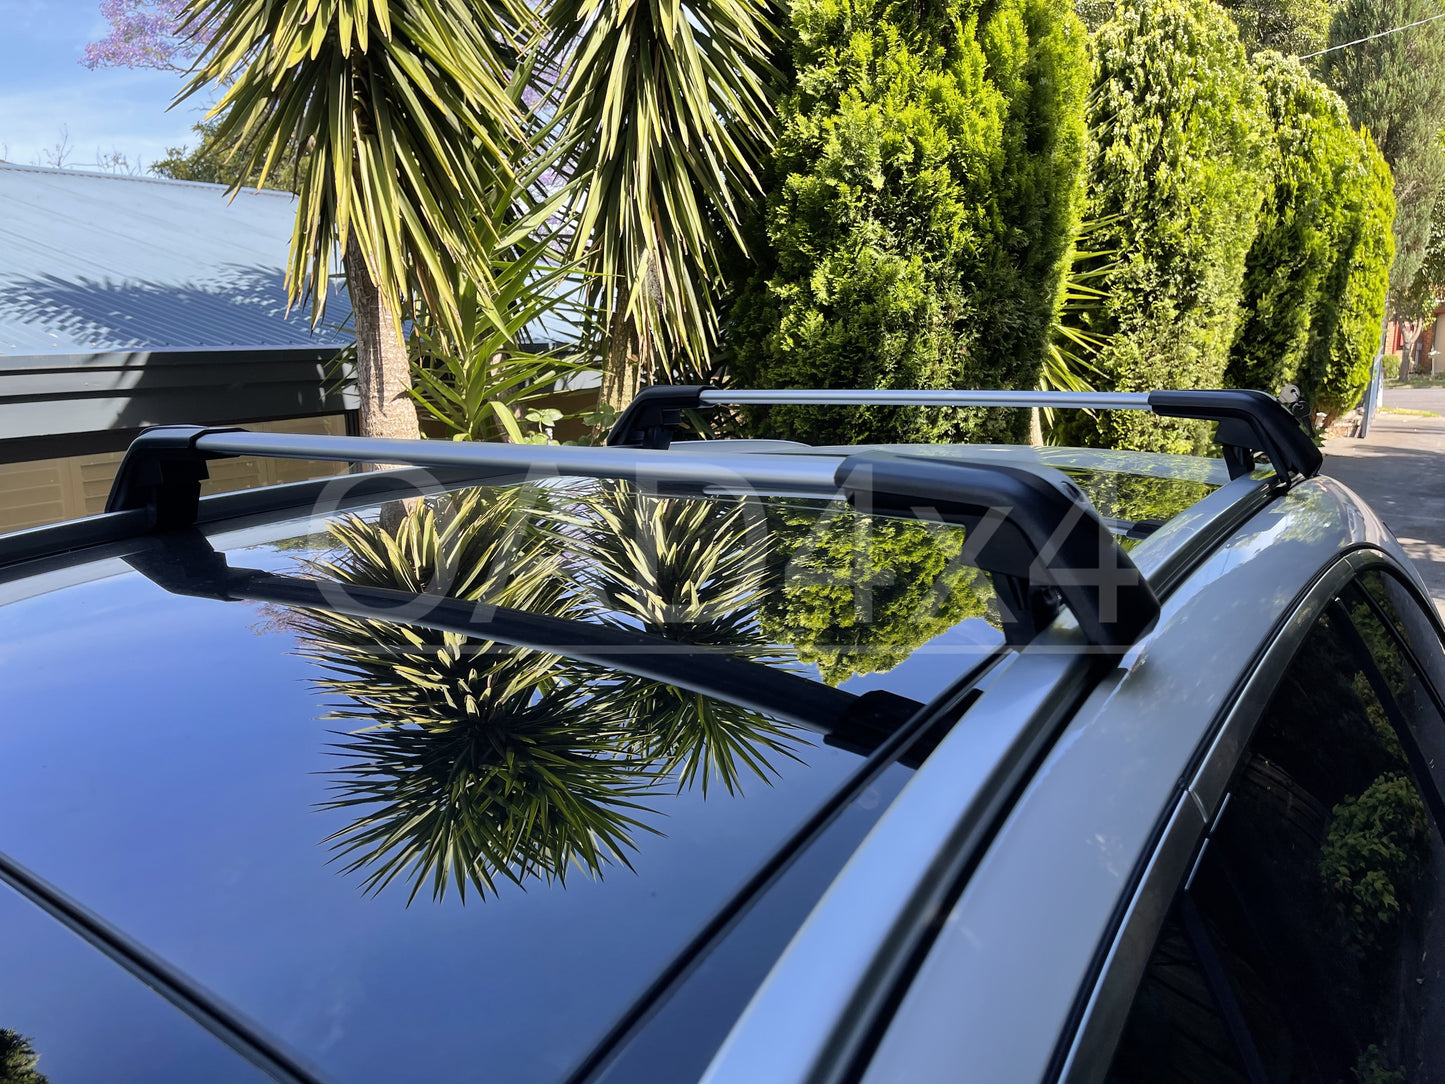 1 Pair Aluminum Silver Cross Bar Roof Racks Baggage Holder for Lexus LX570 Clamp in Flush Rail